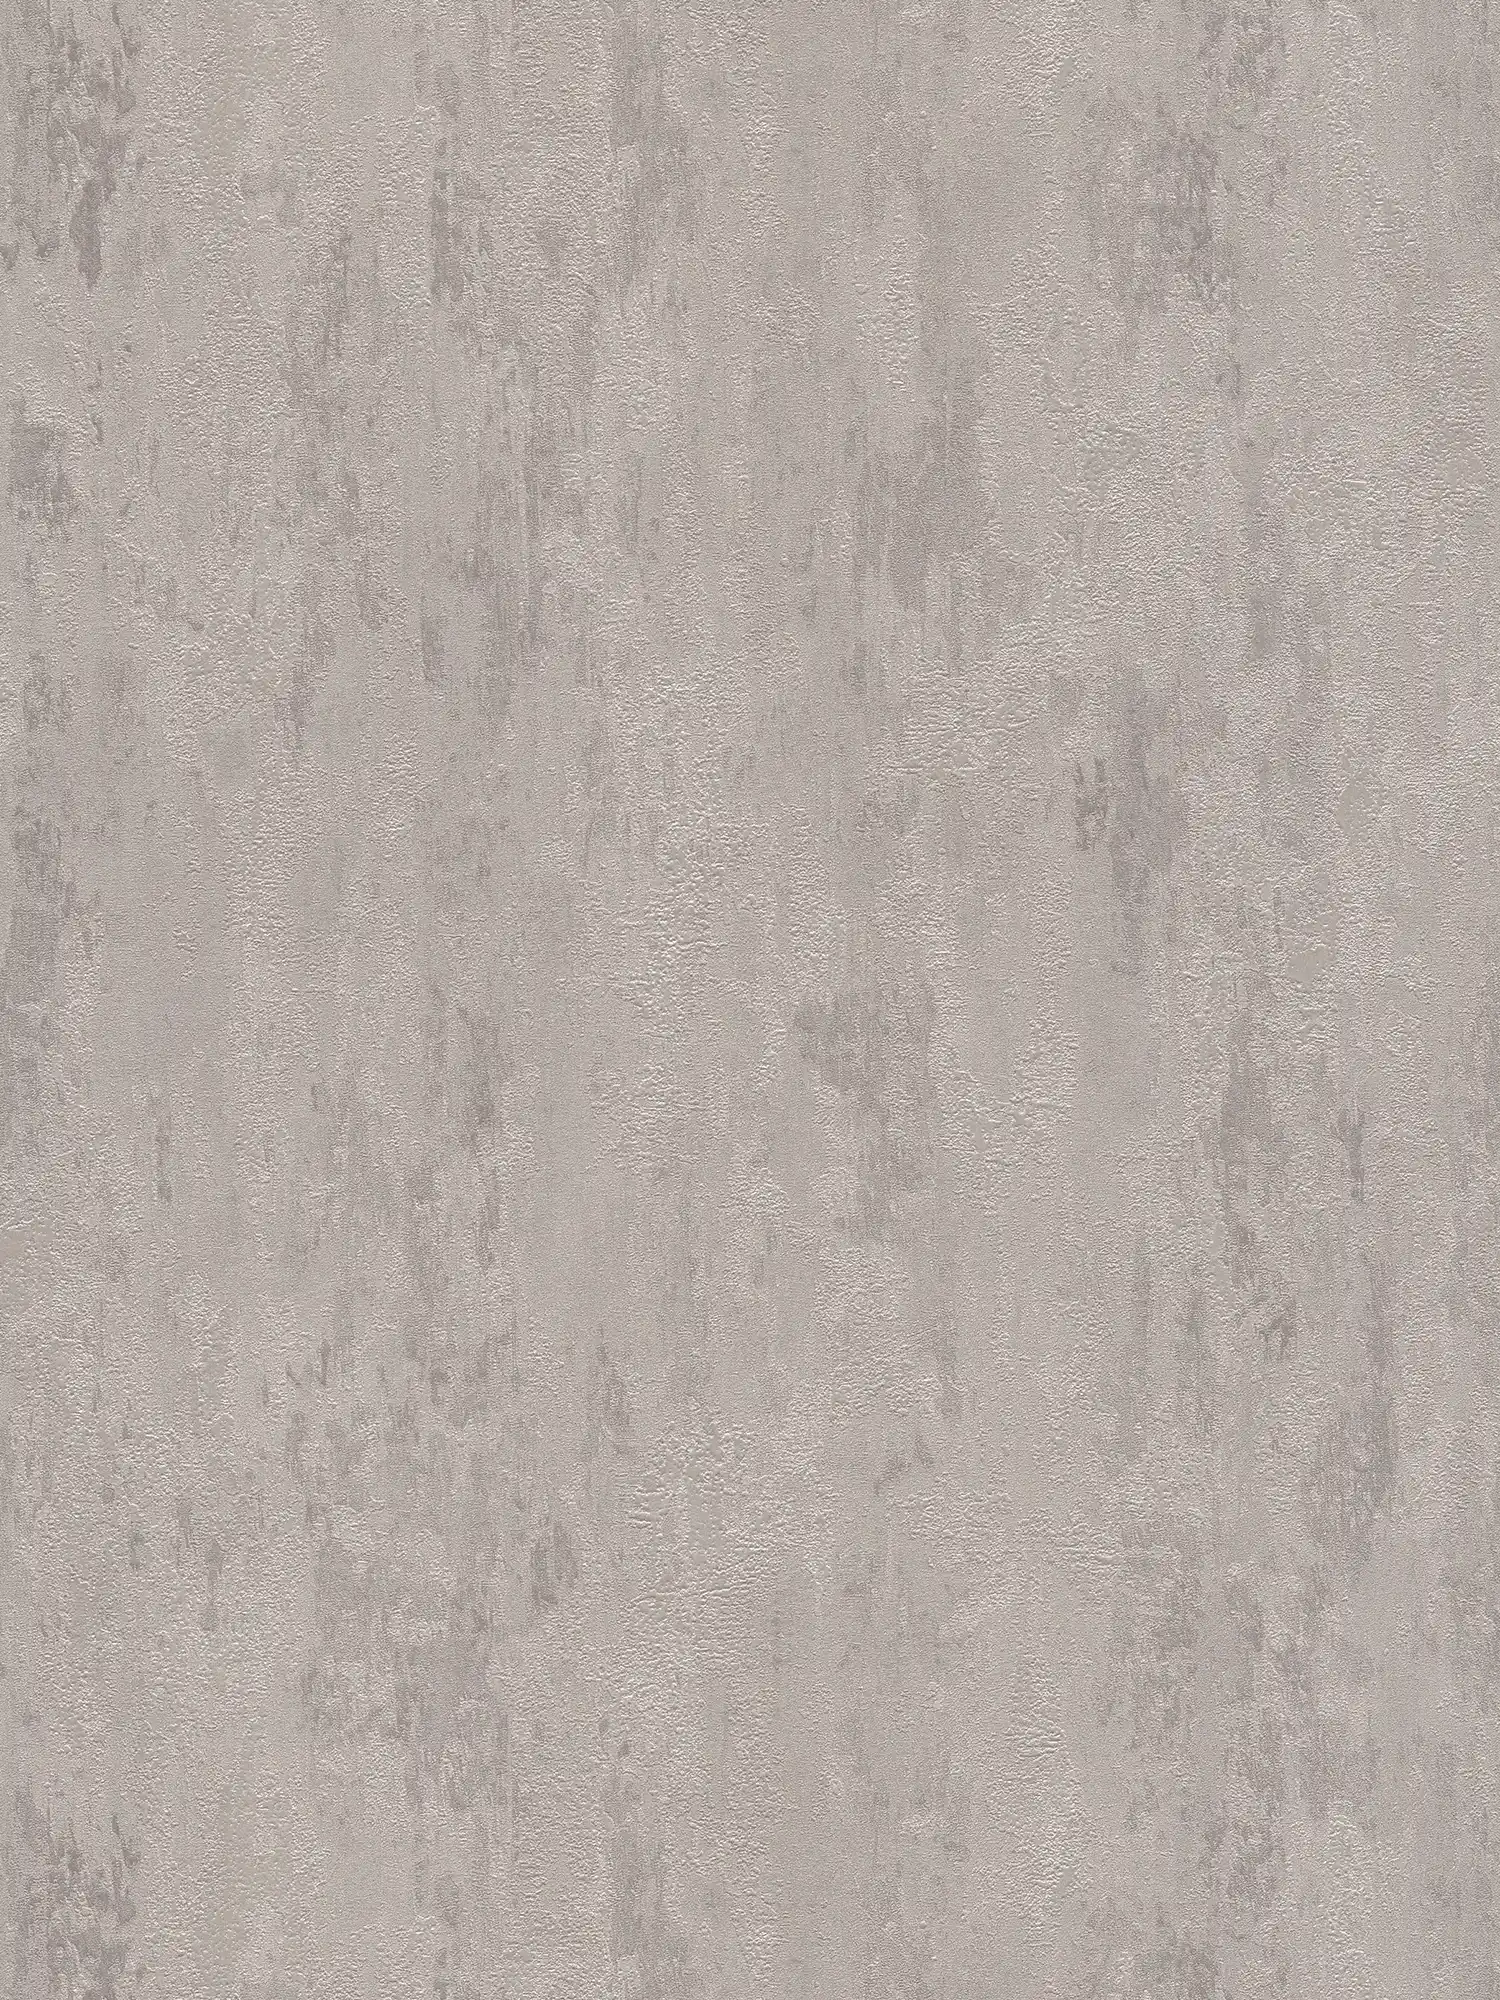 Tapete Industrial Stil mit Struktureffekt – Creme, Grau, Metallic
